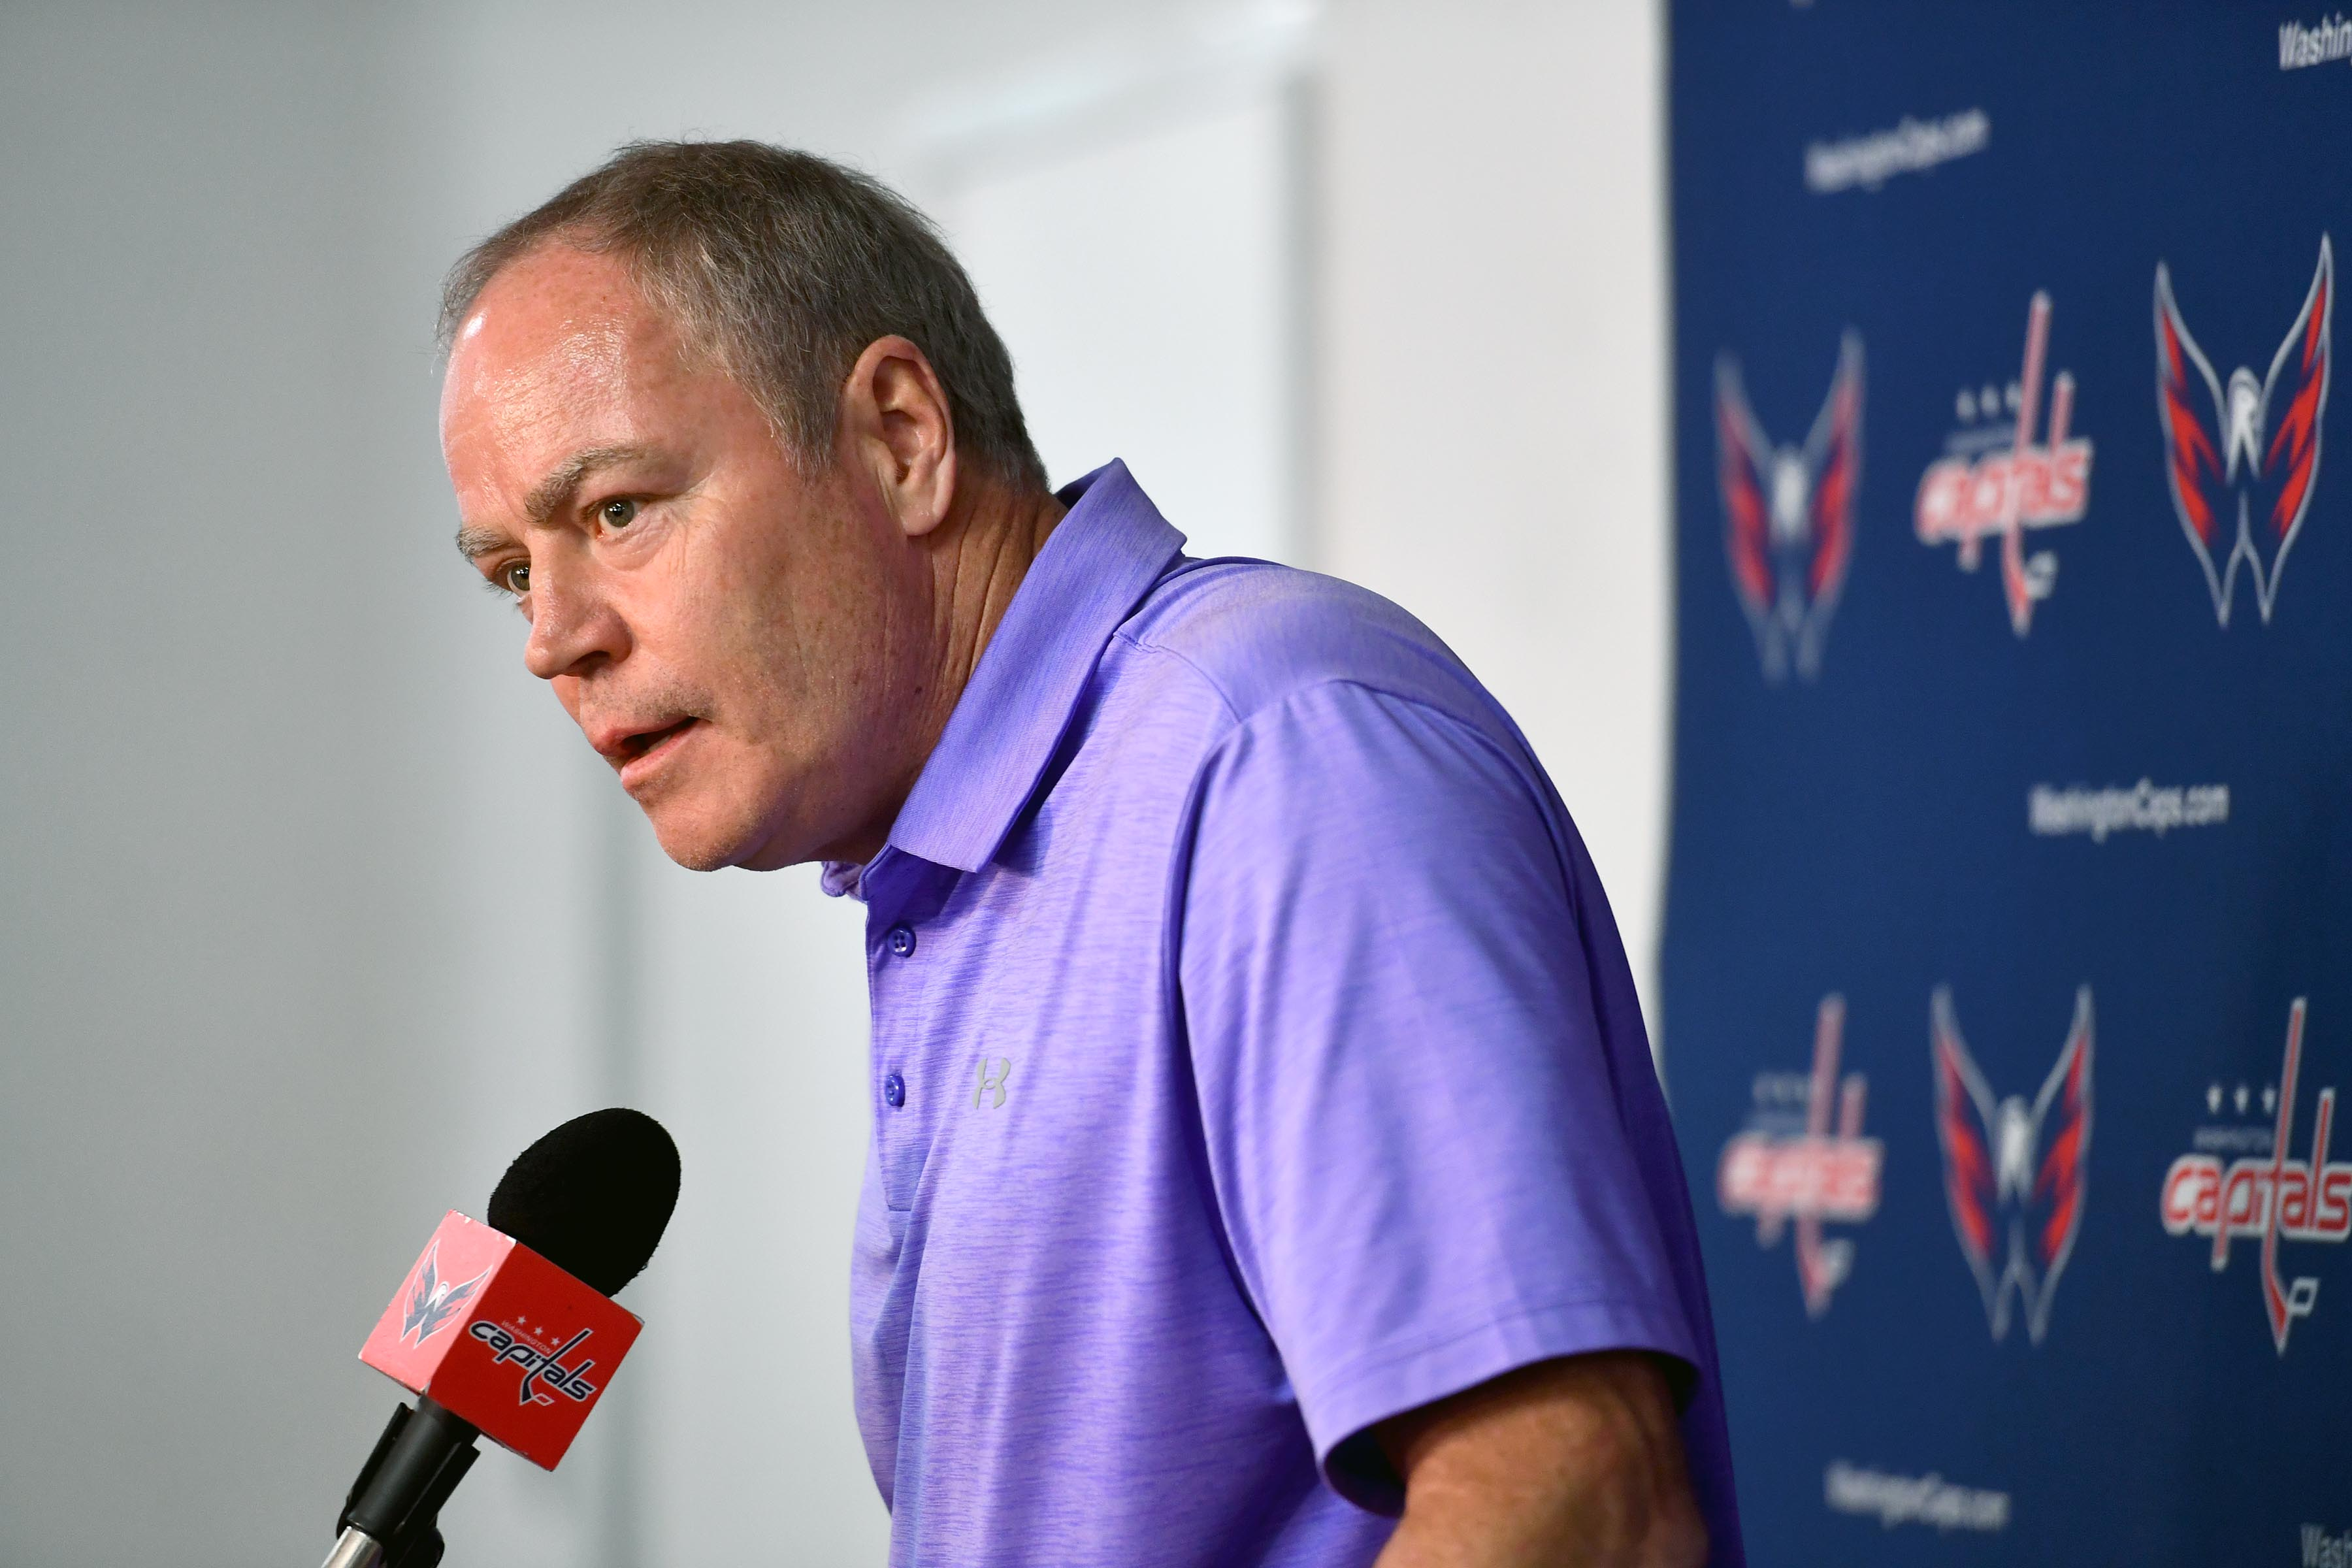 Washington Capitals GM announces that coach Barry Trotz resigns